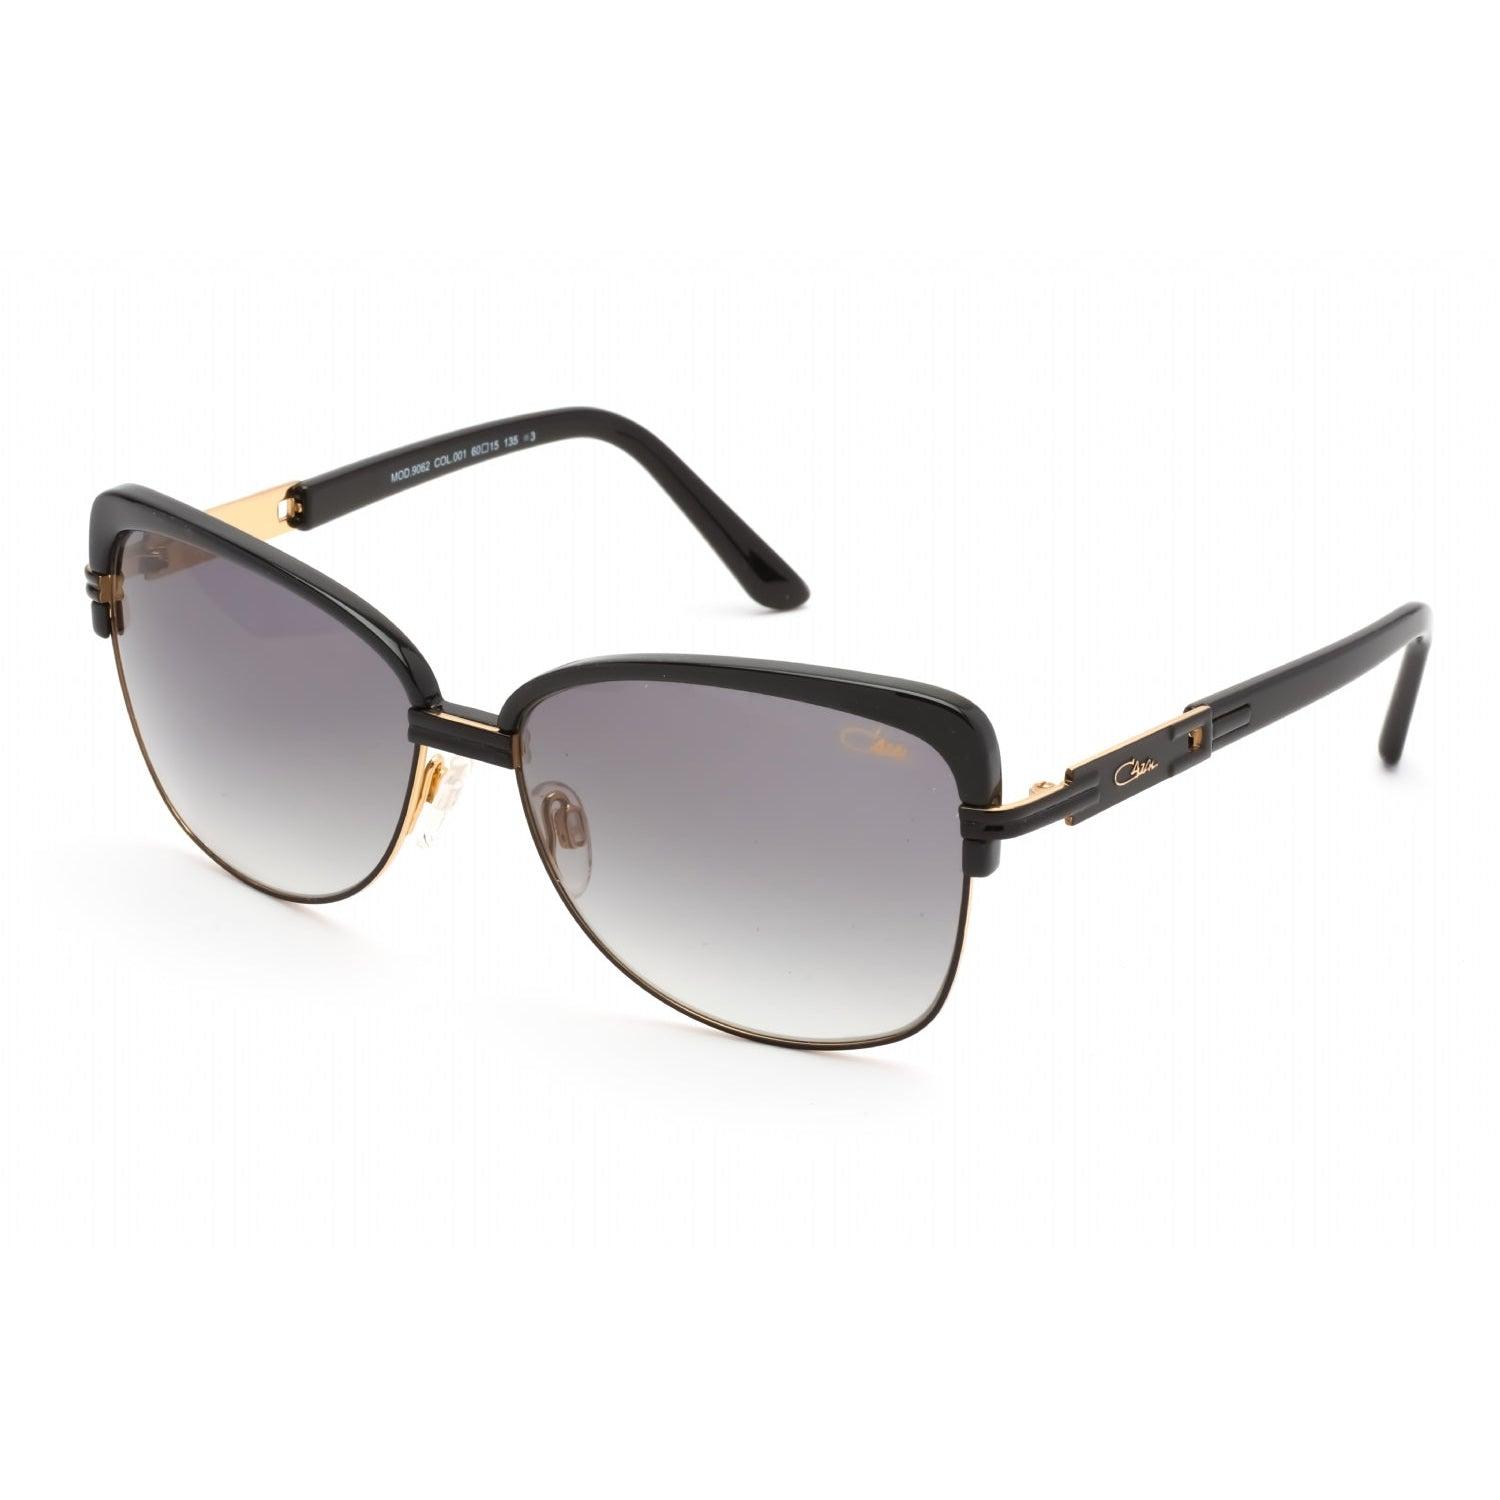 Cazal 9062 Sunglasses Black / Grey Gradient Unisex (s) in Gray | Lyst